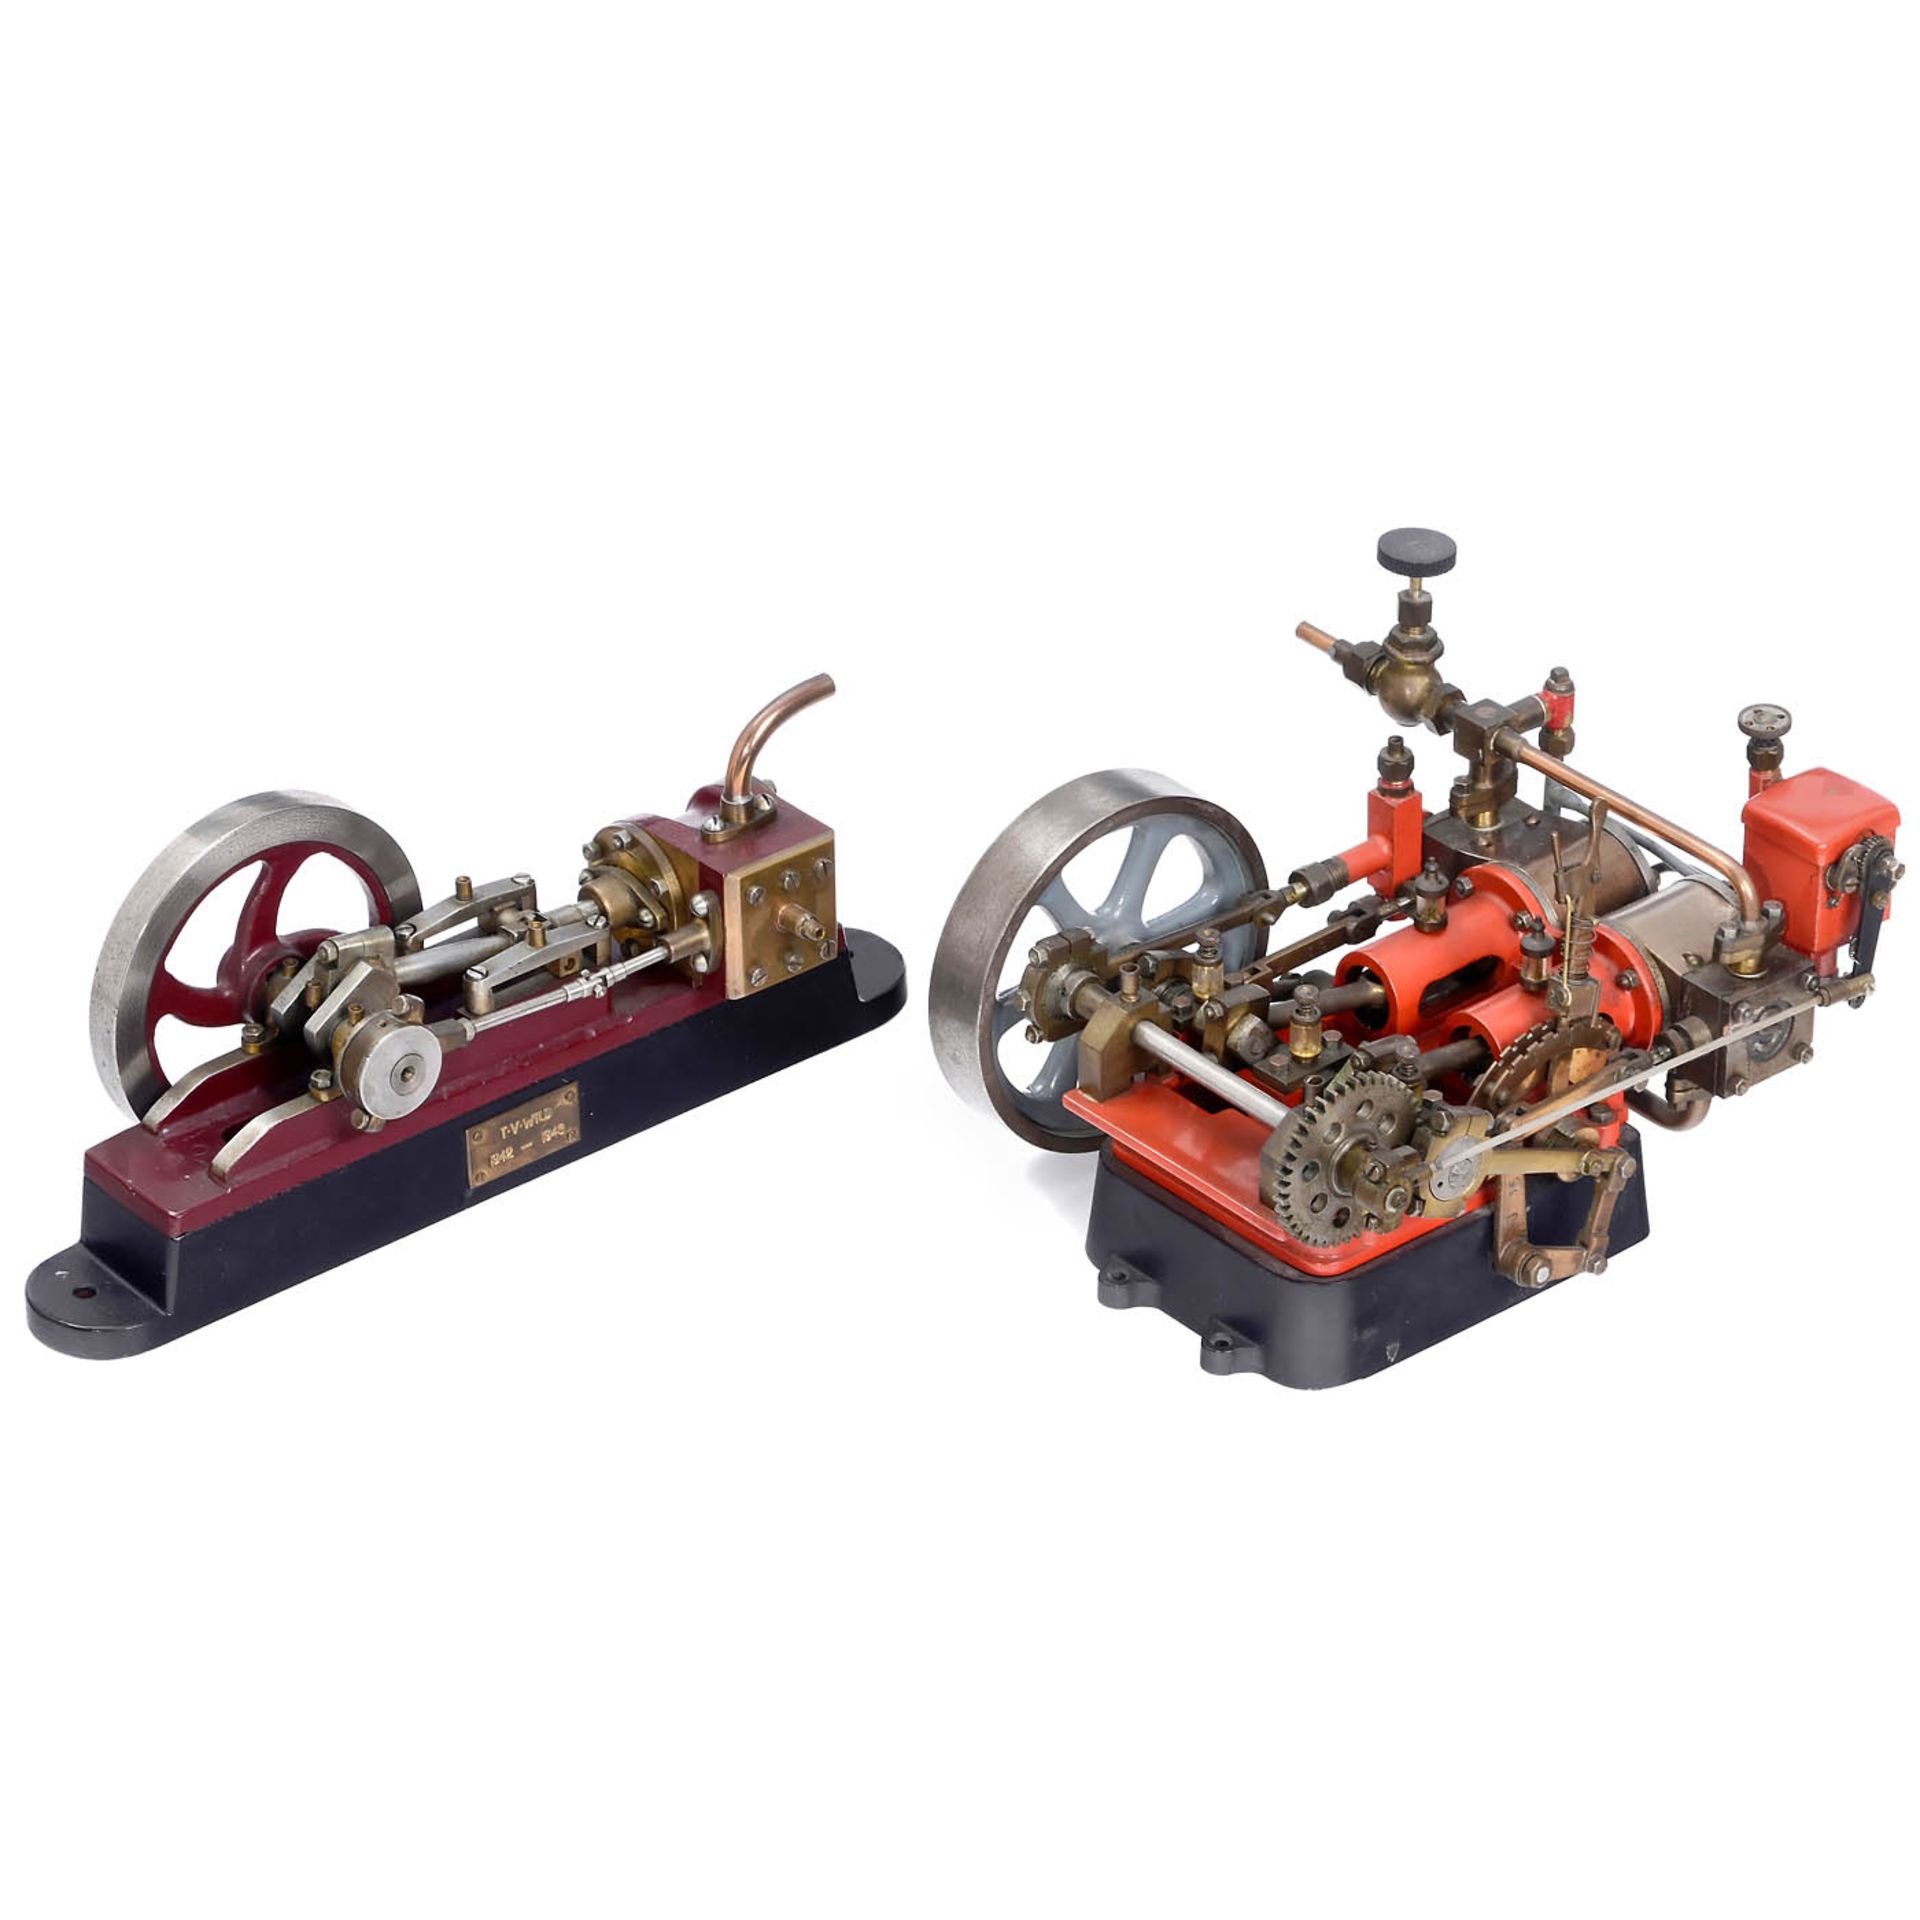 2 Horizontal Steam Engines, c. 1950 - Image 2 of 2